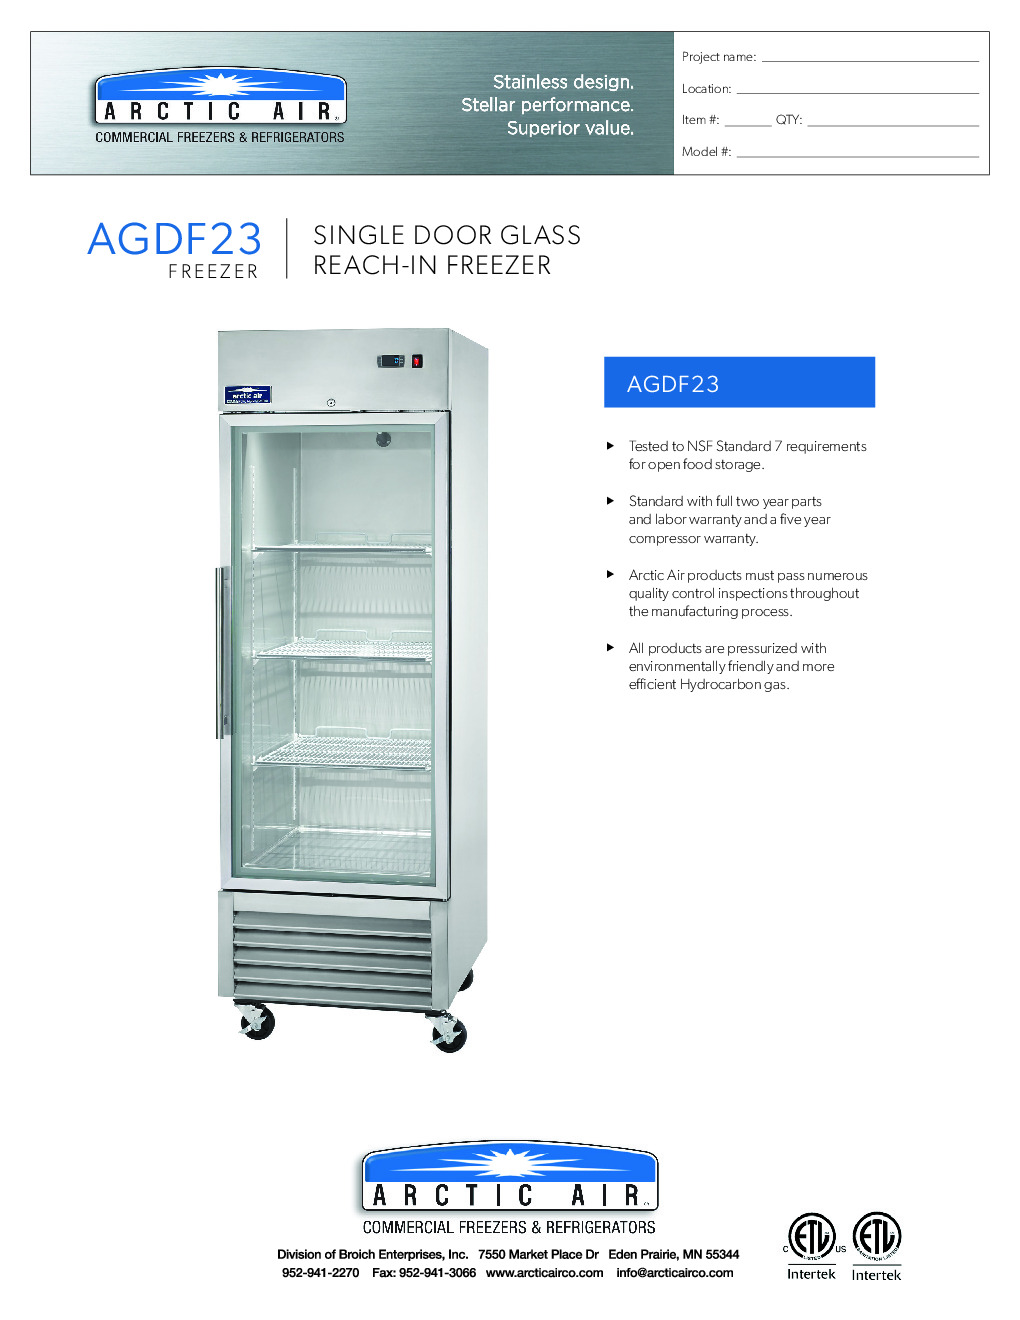 Arctic Air AGDF23 Reach-In Freezer